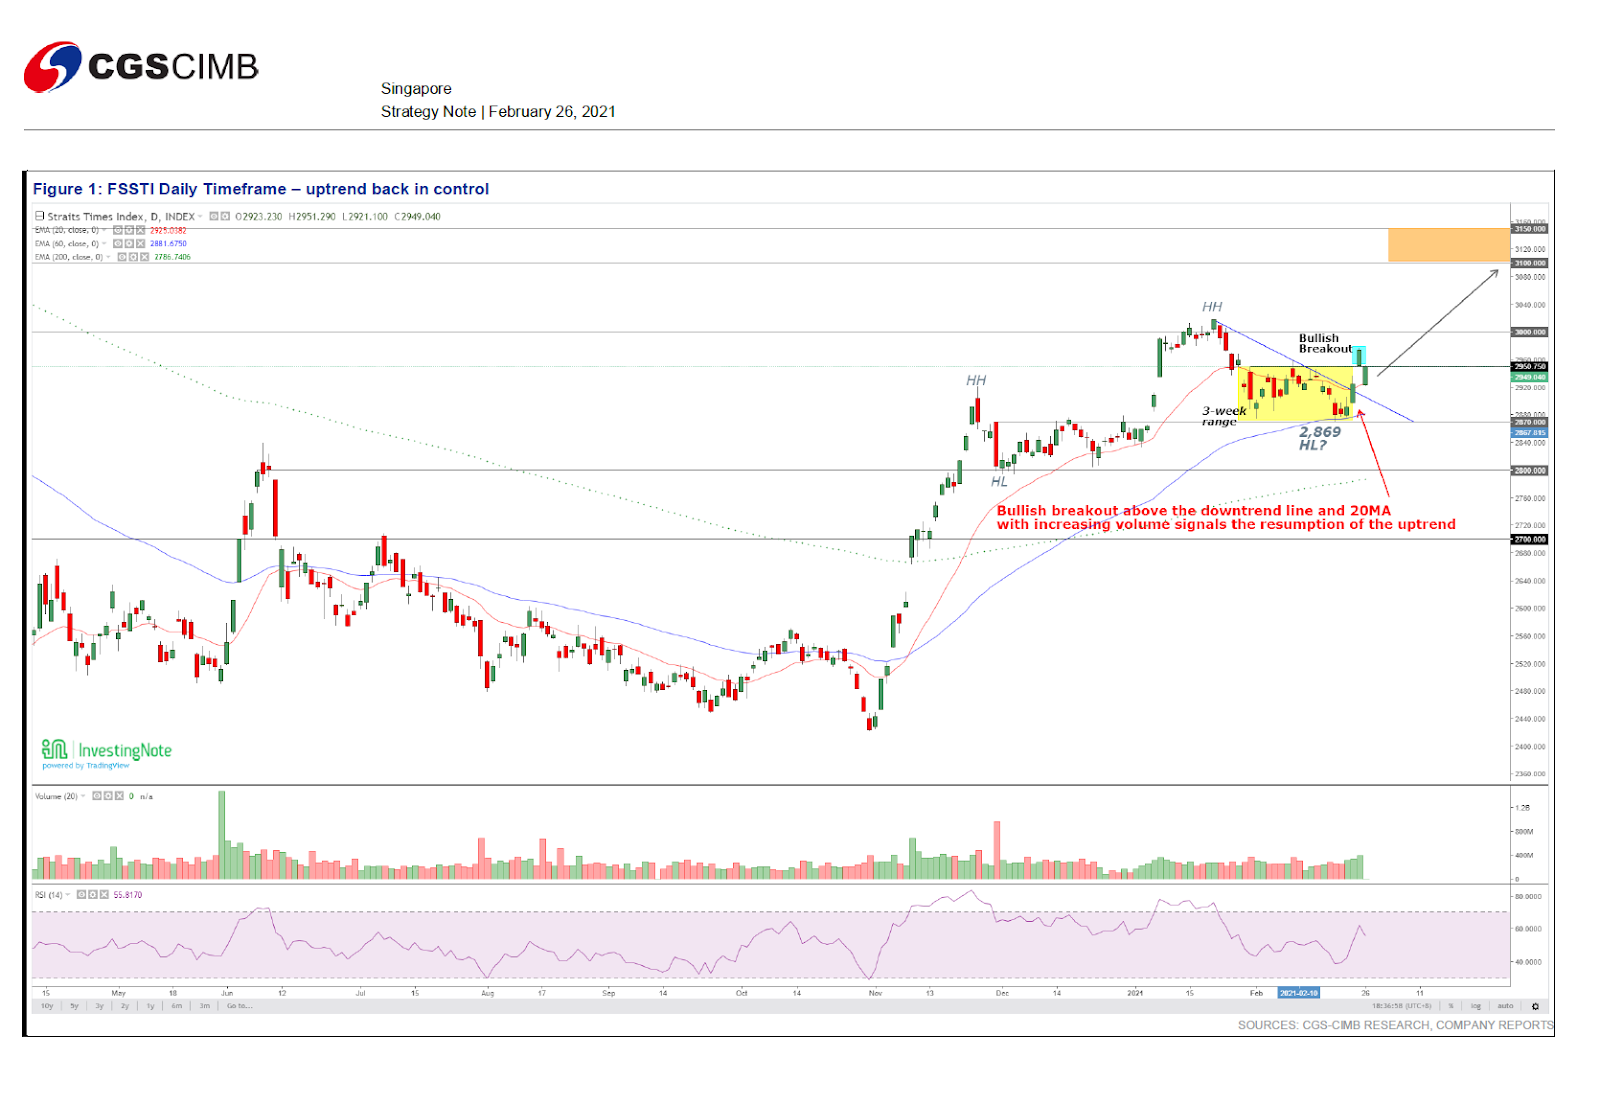 Singapore Market The Straits Times Index - CGS-CIMB Research | SGinvestors.io